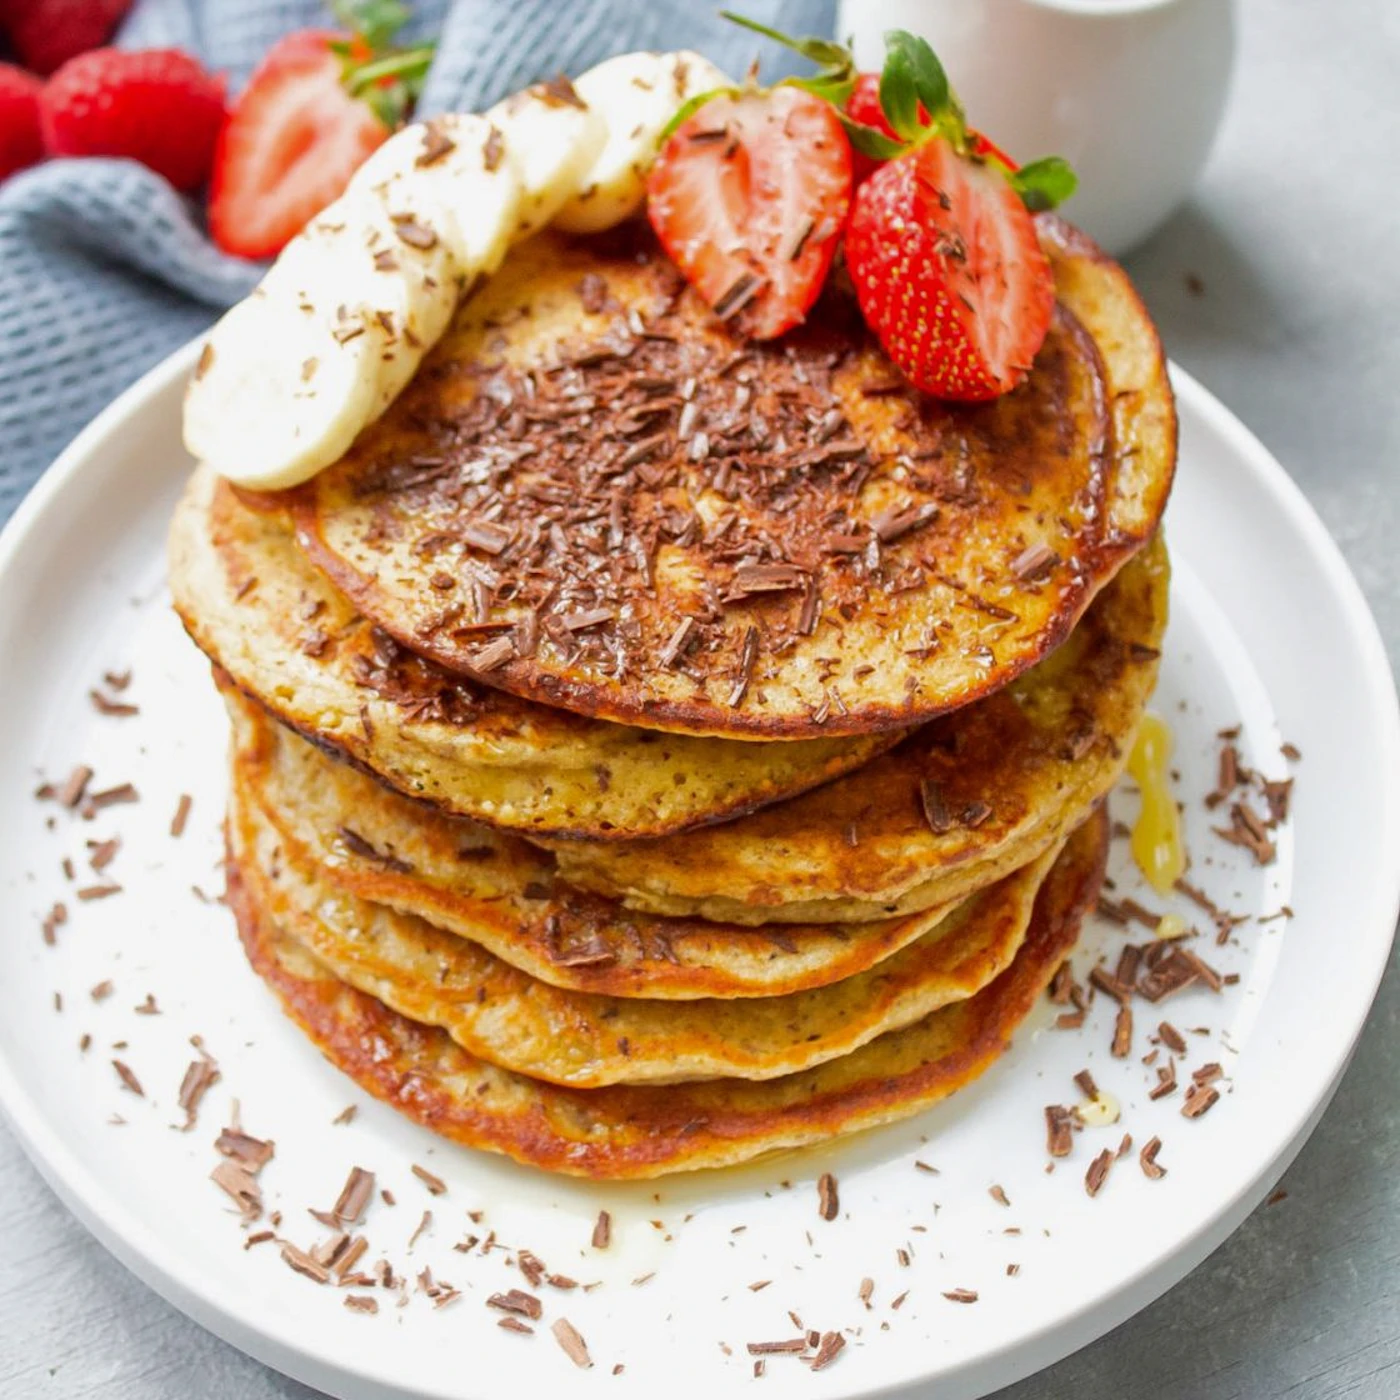 Banana oat pancake recipe for post-workout protein kick